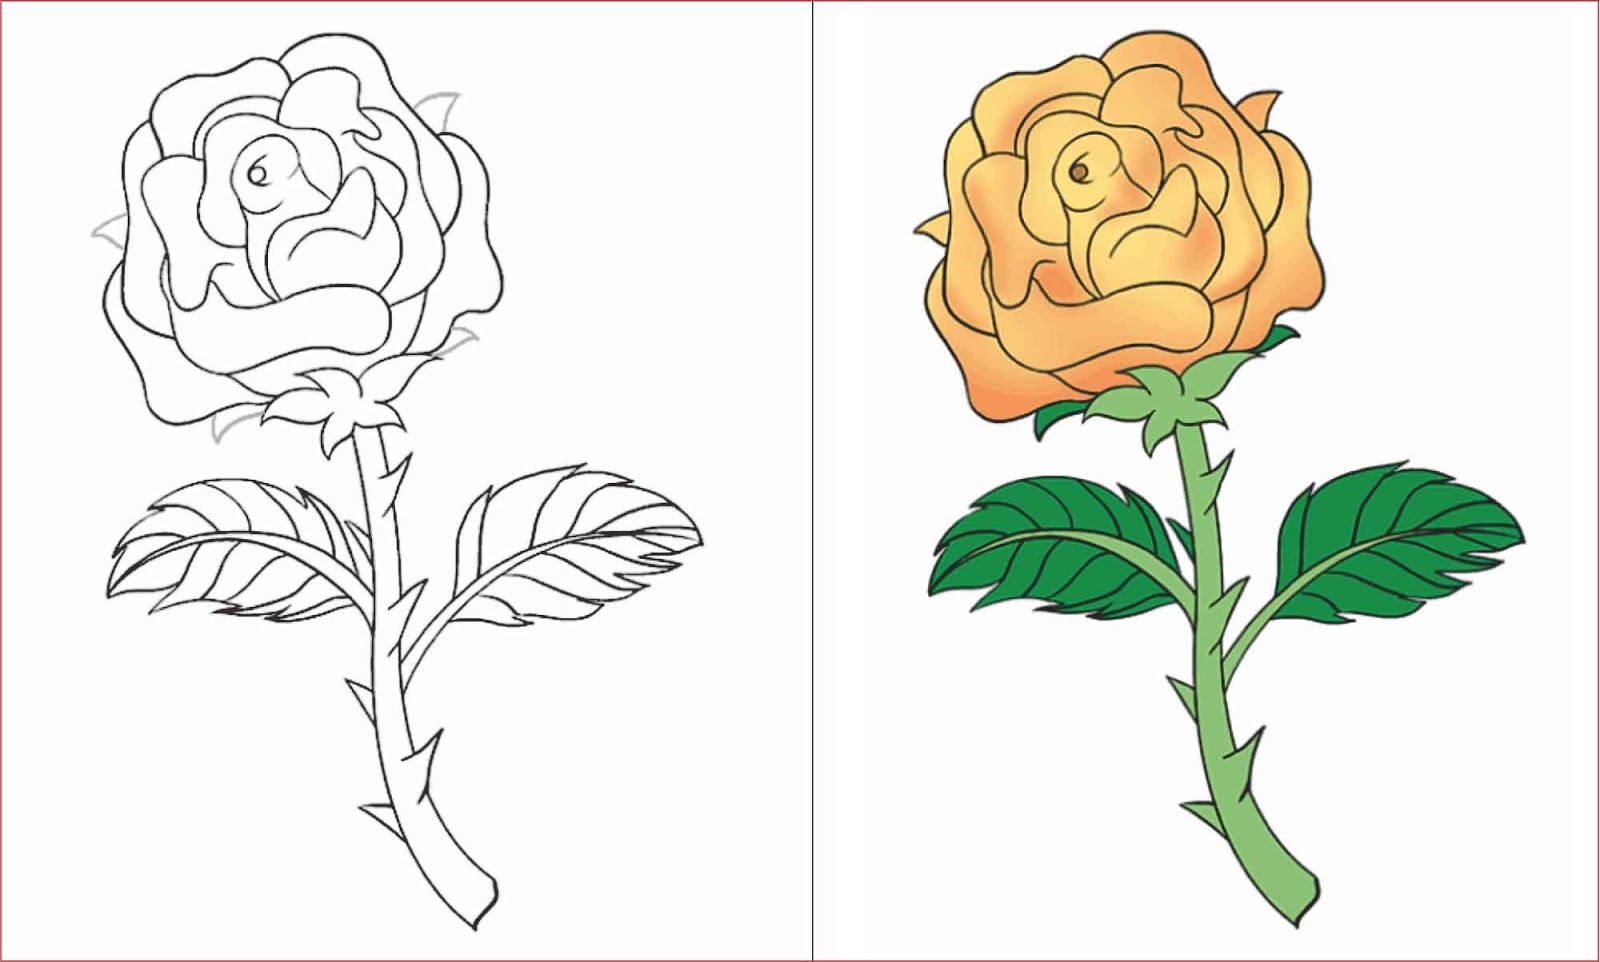 Mudah Digambar Sketsa Gambar Bunga Sakura Berwarna Mantap